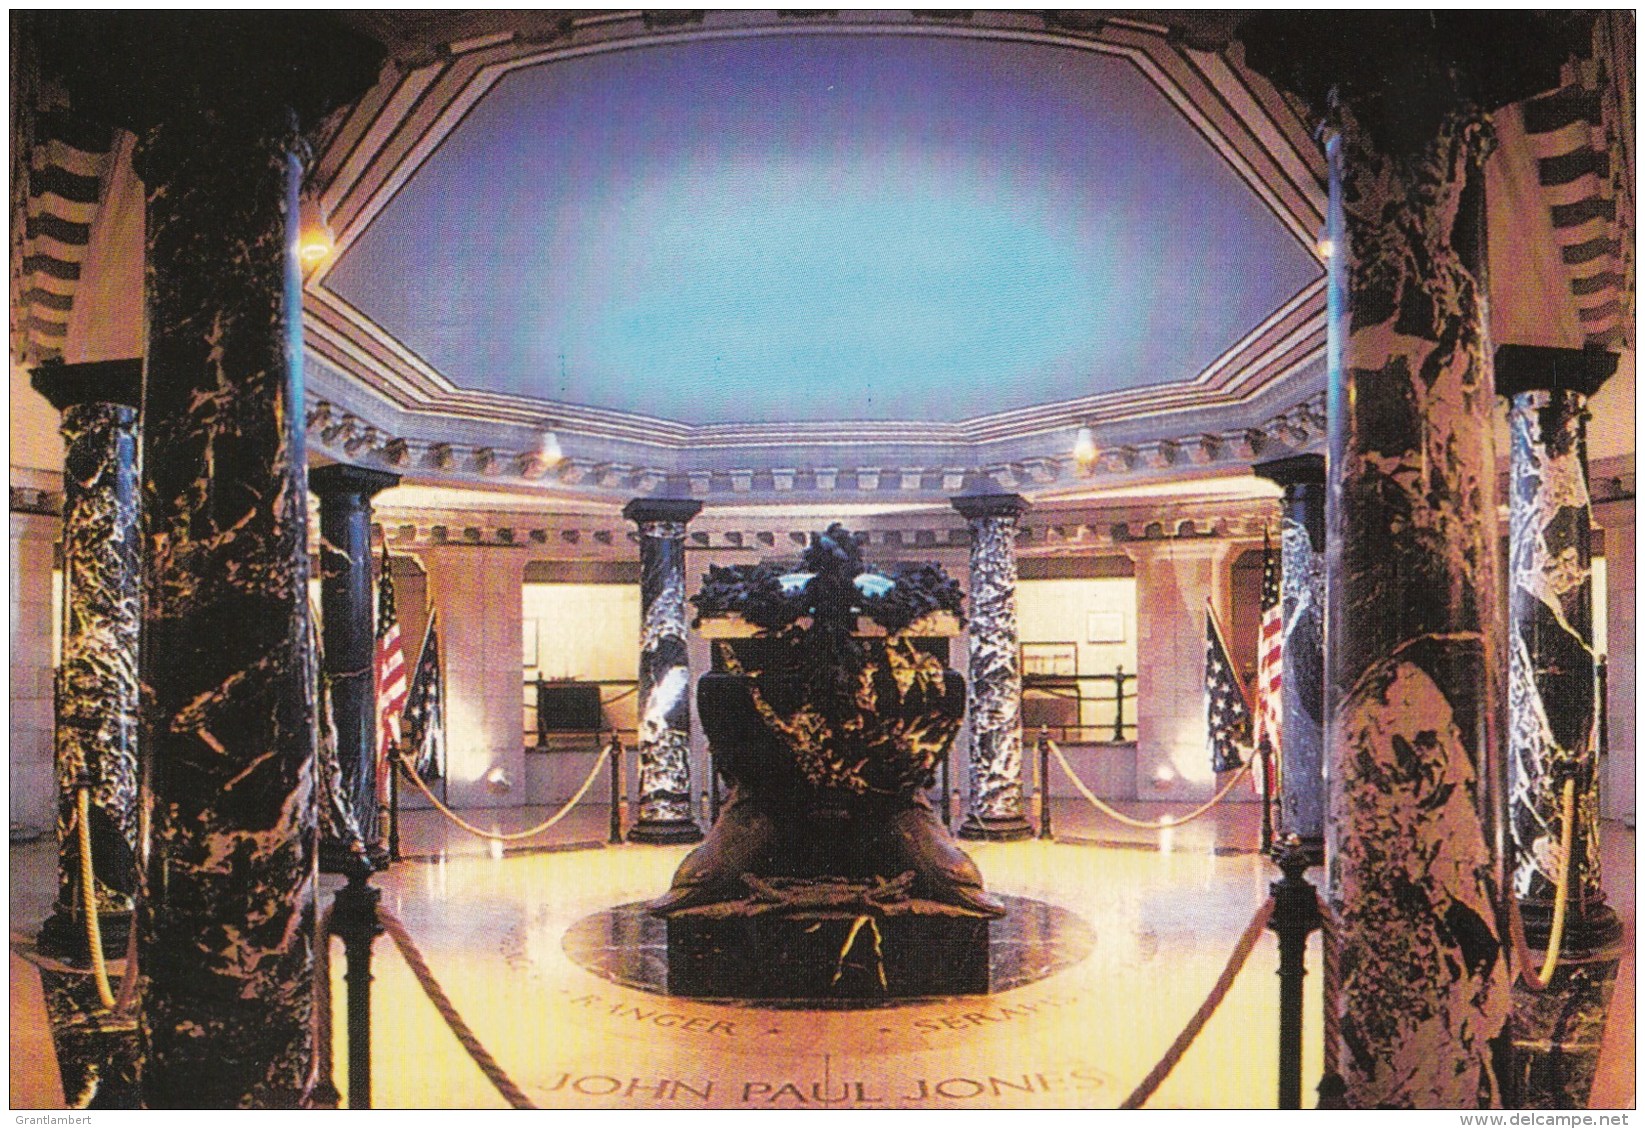 The Crypt Of John Paul Jones, US Naval Academy, Annapolis, Maryland - Traub A 118 Unused - Annapolis – Naval Academy